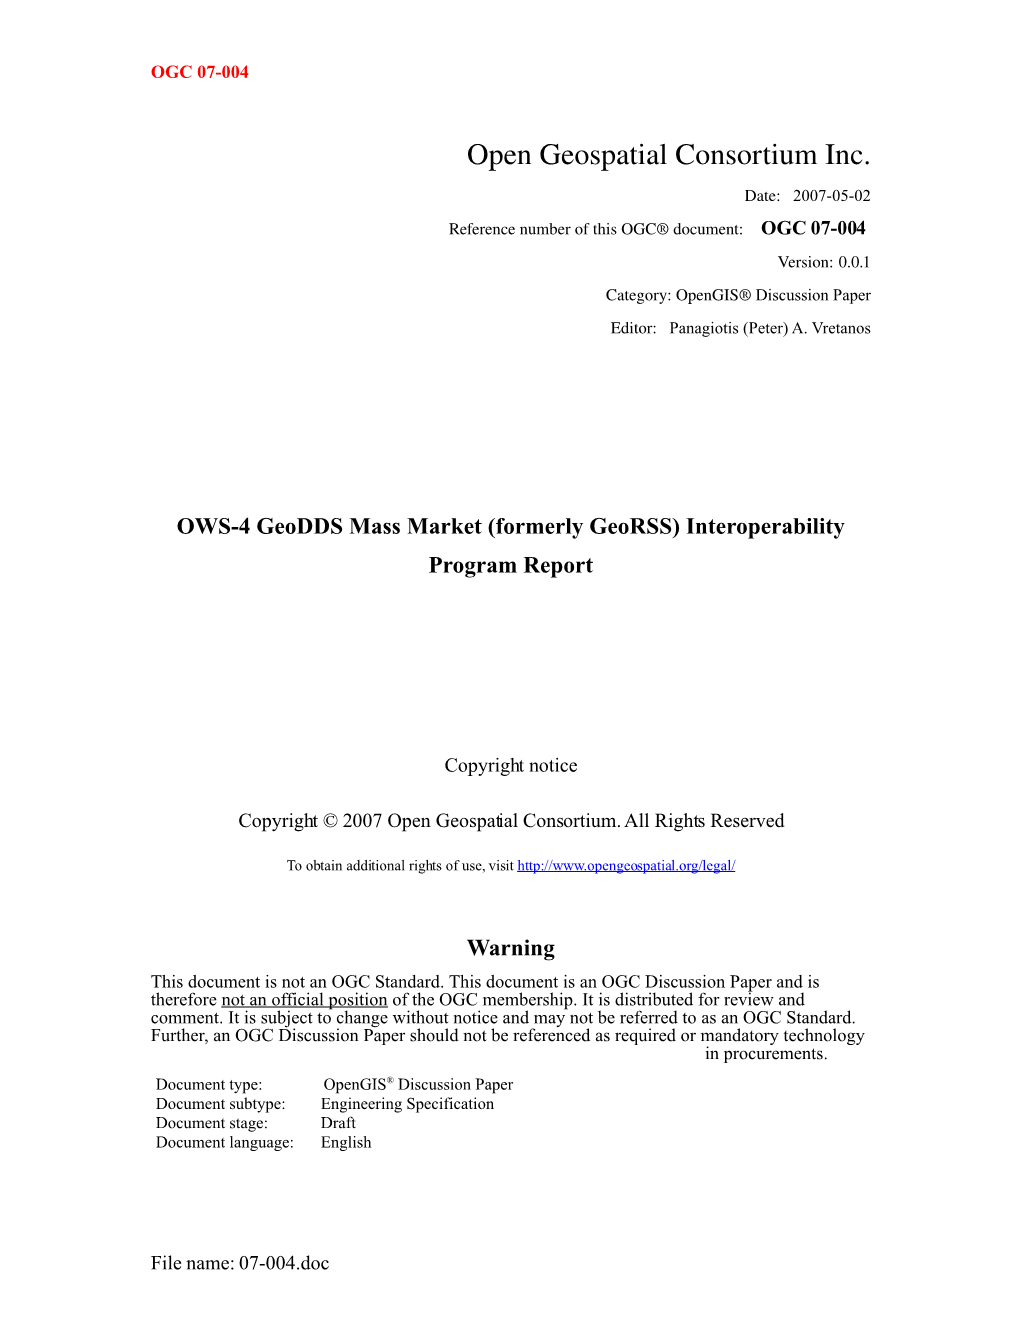 OWS-4 Geodds Mass Market (Formerly Georss) Interoperability Program Report